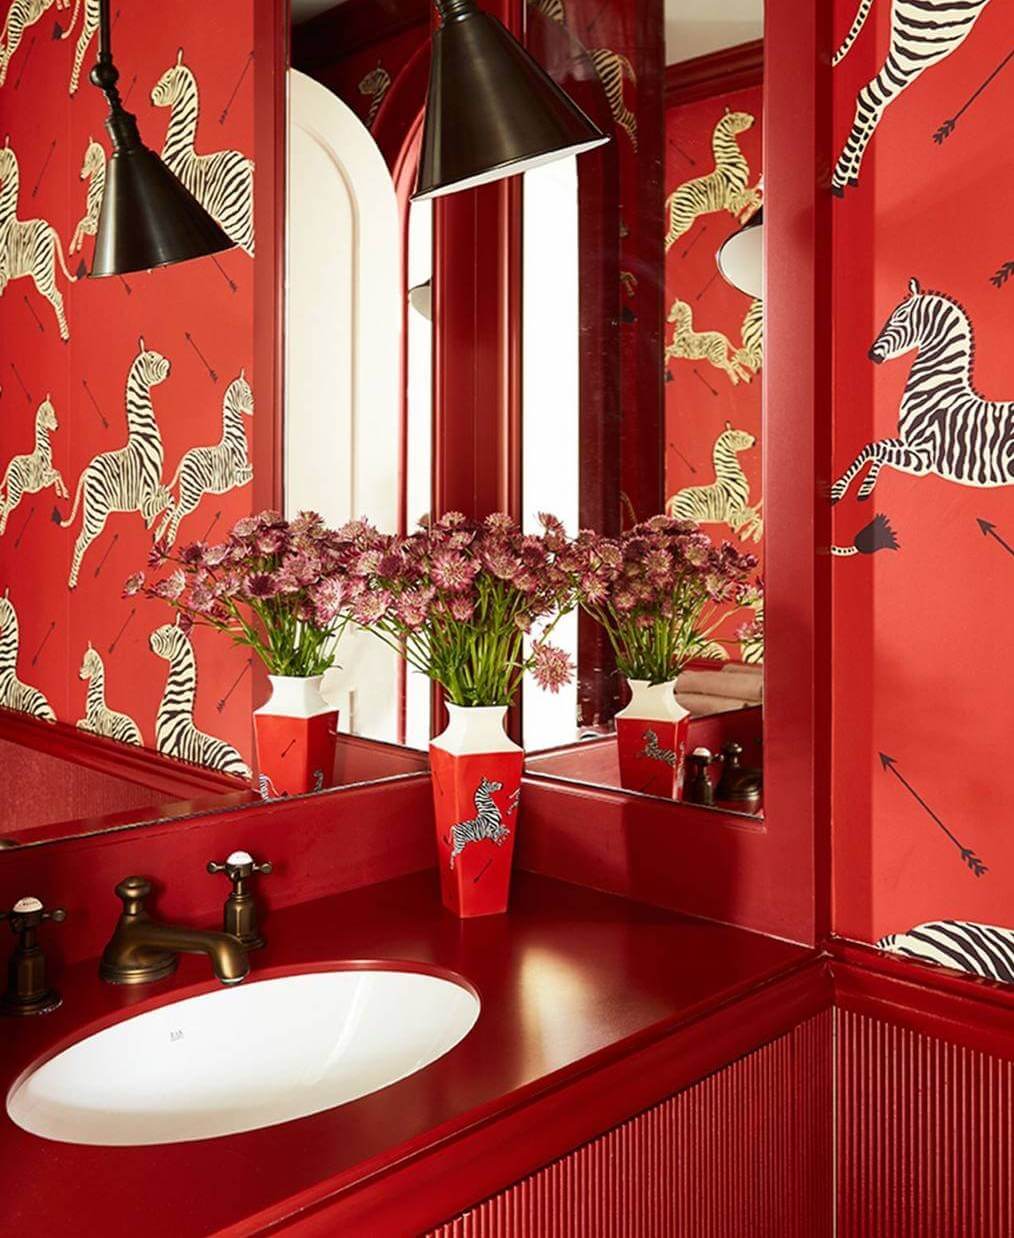 Bathroom of a London house designed by Beata Heuman